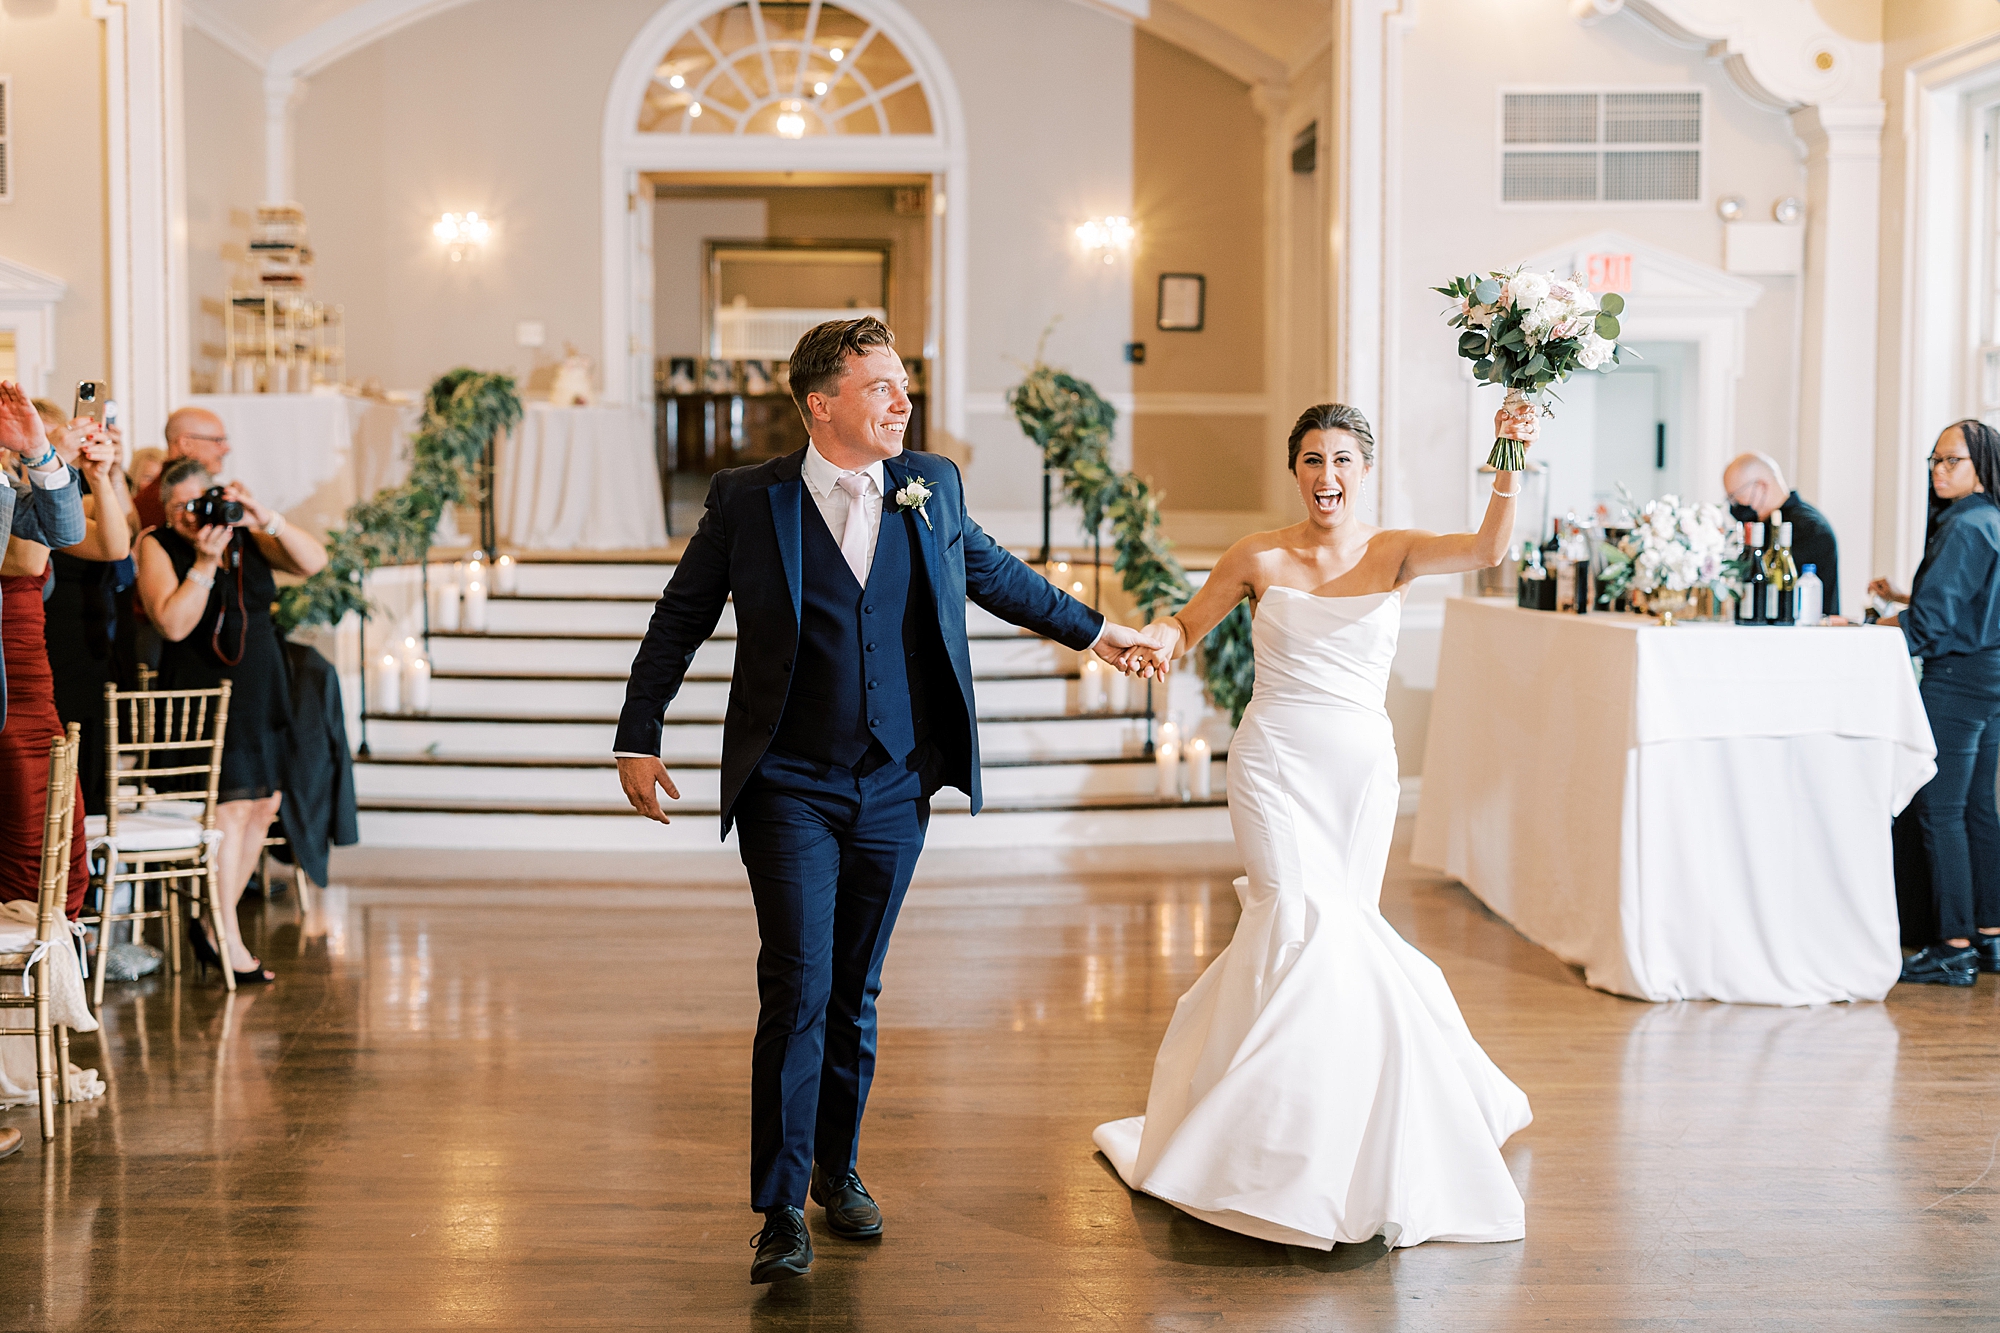 newlyweds cheer walking into wedding reception at the Philadelphia Cricket Club